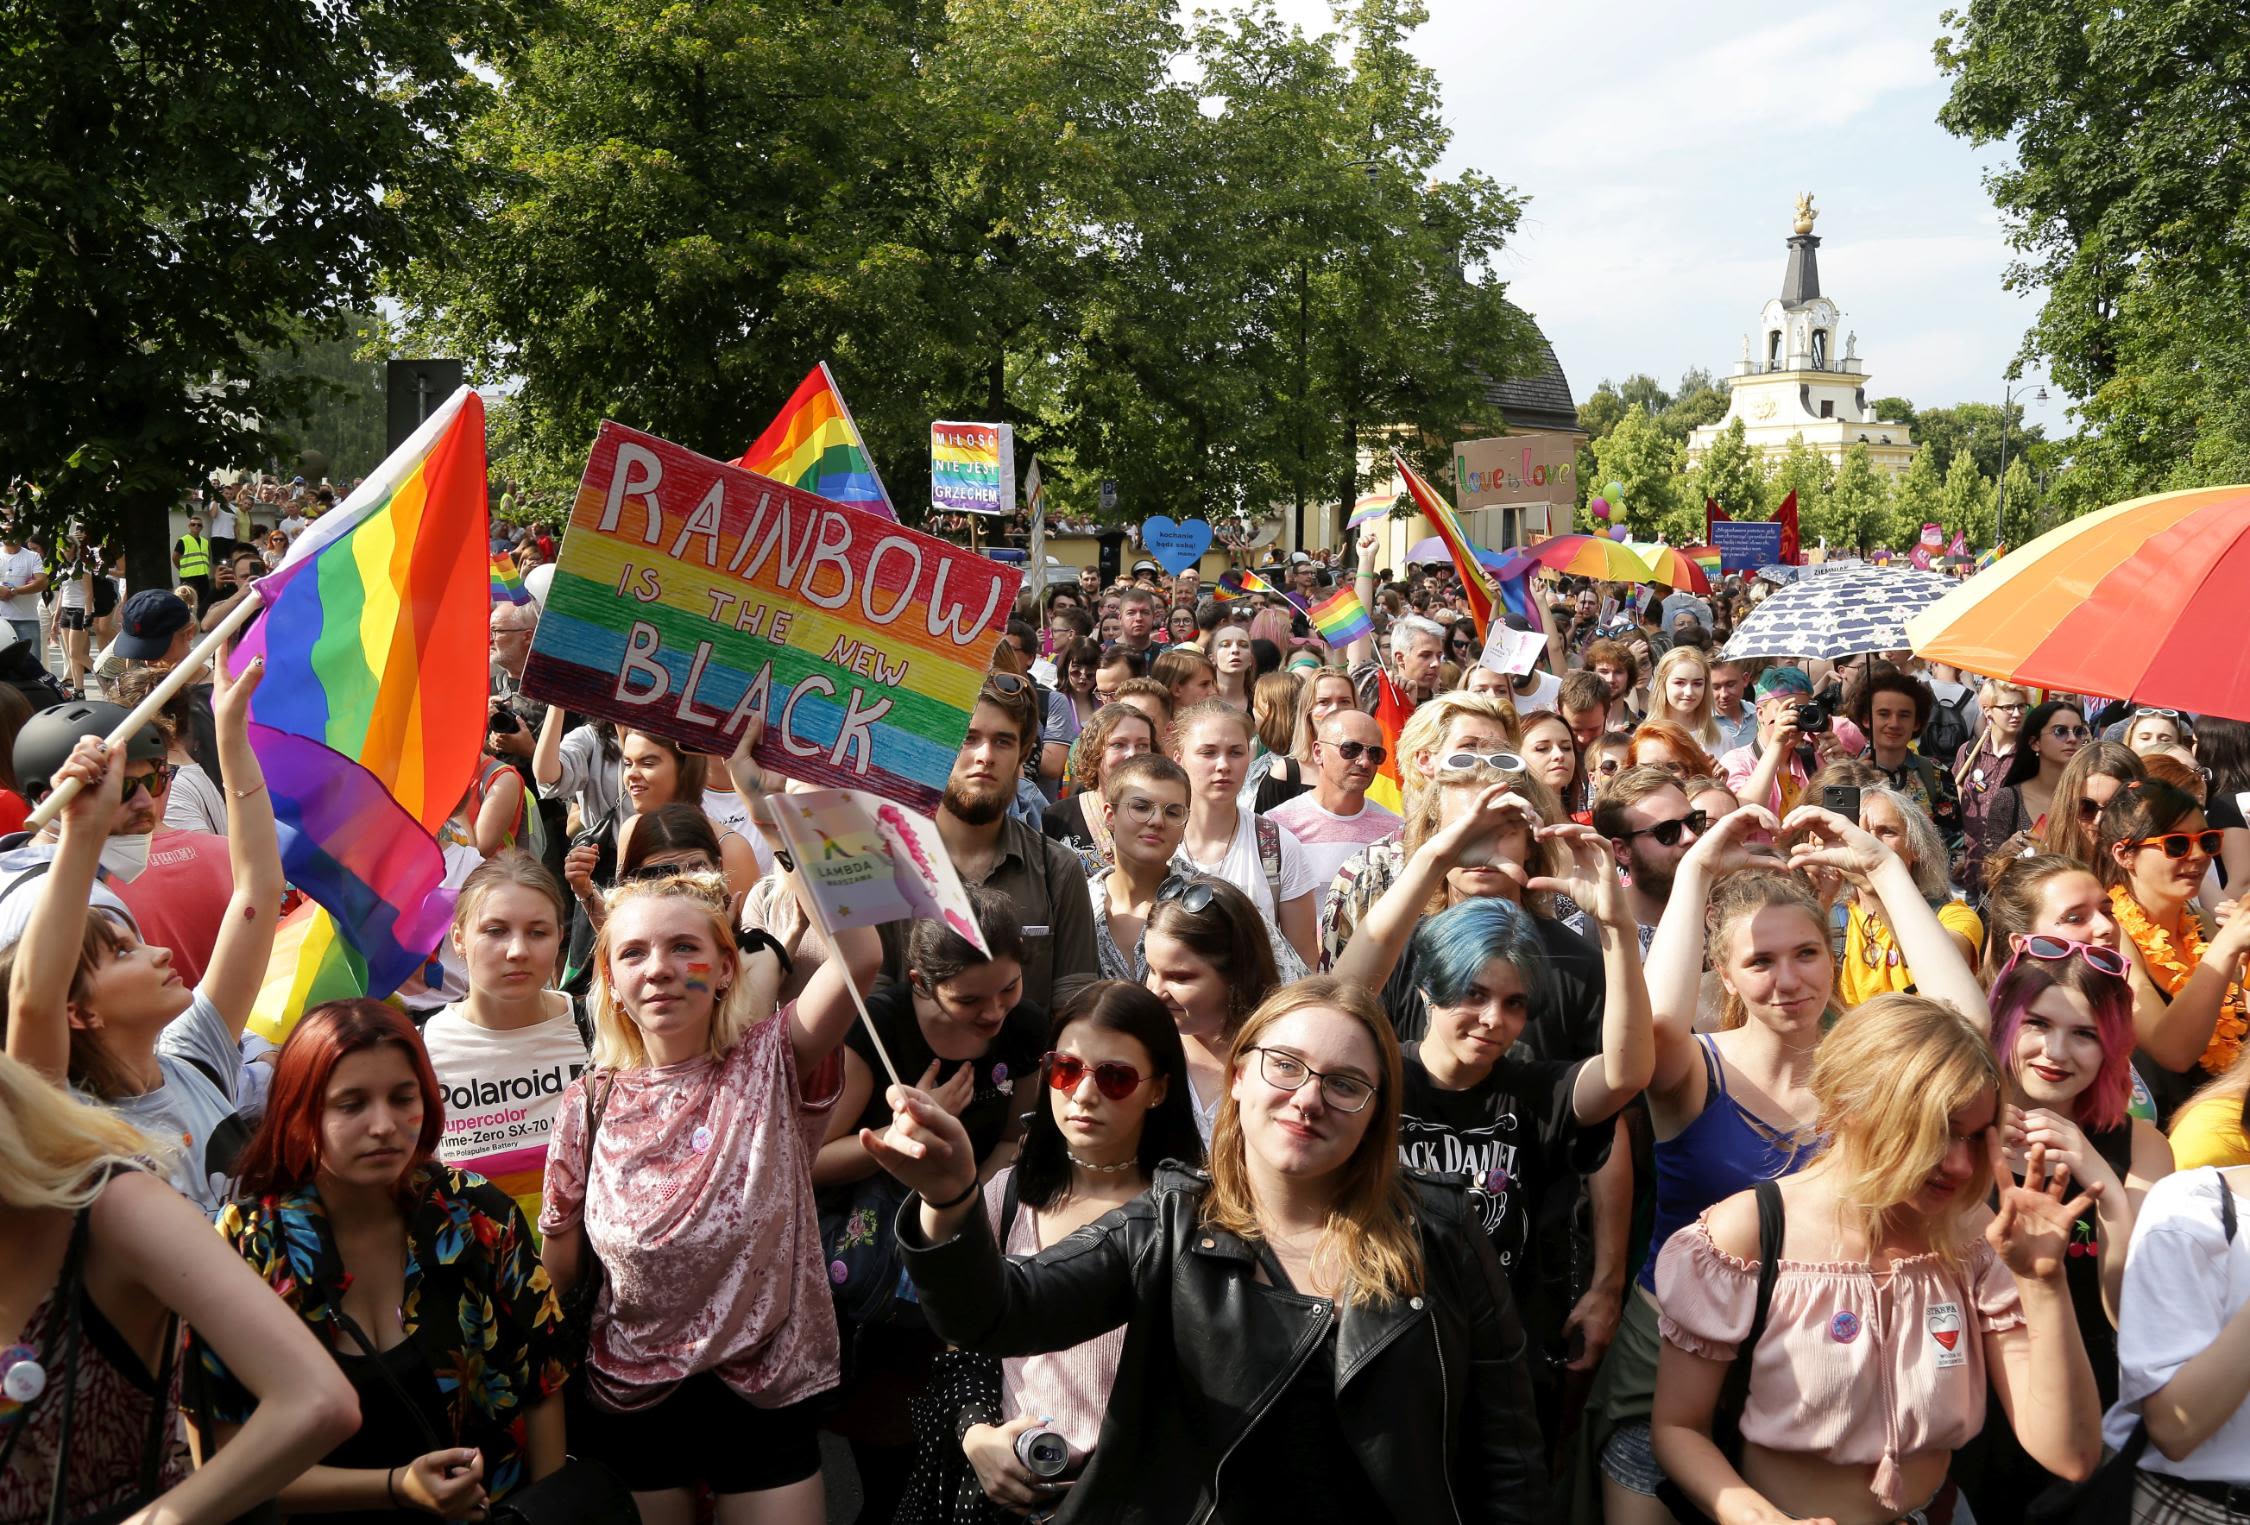 LGBTQ pride parade in Bialystok, Poland, met by far right attacks | CNN